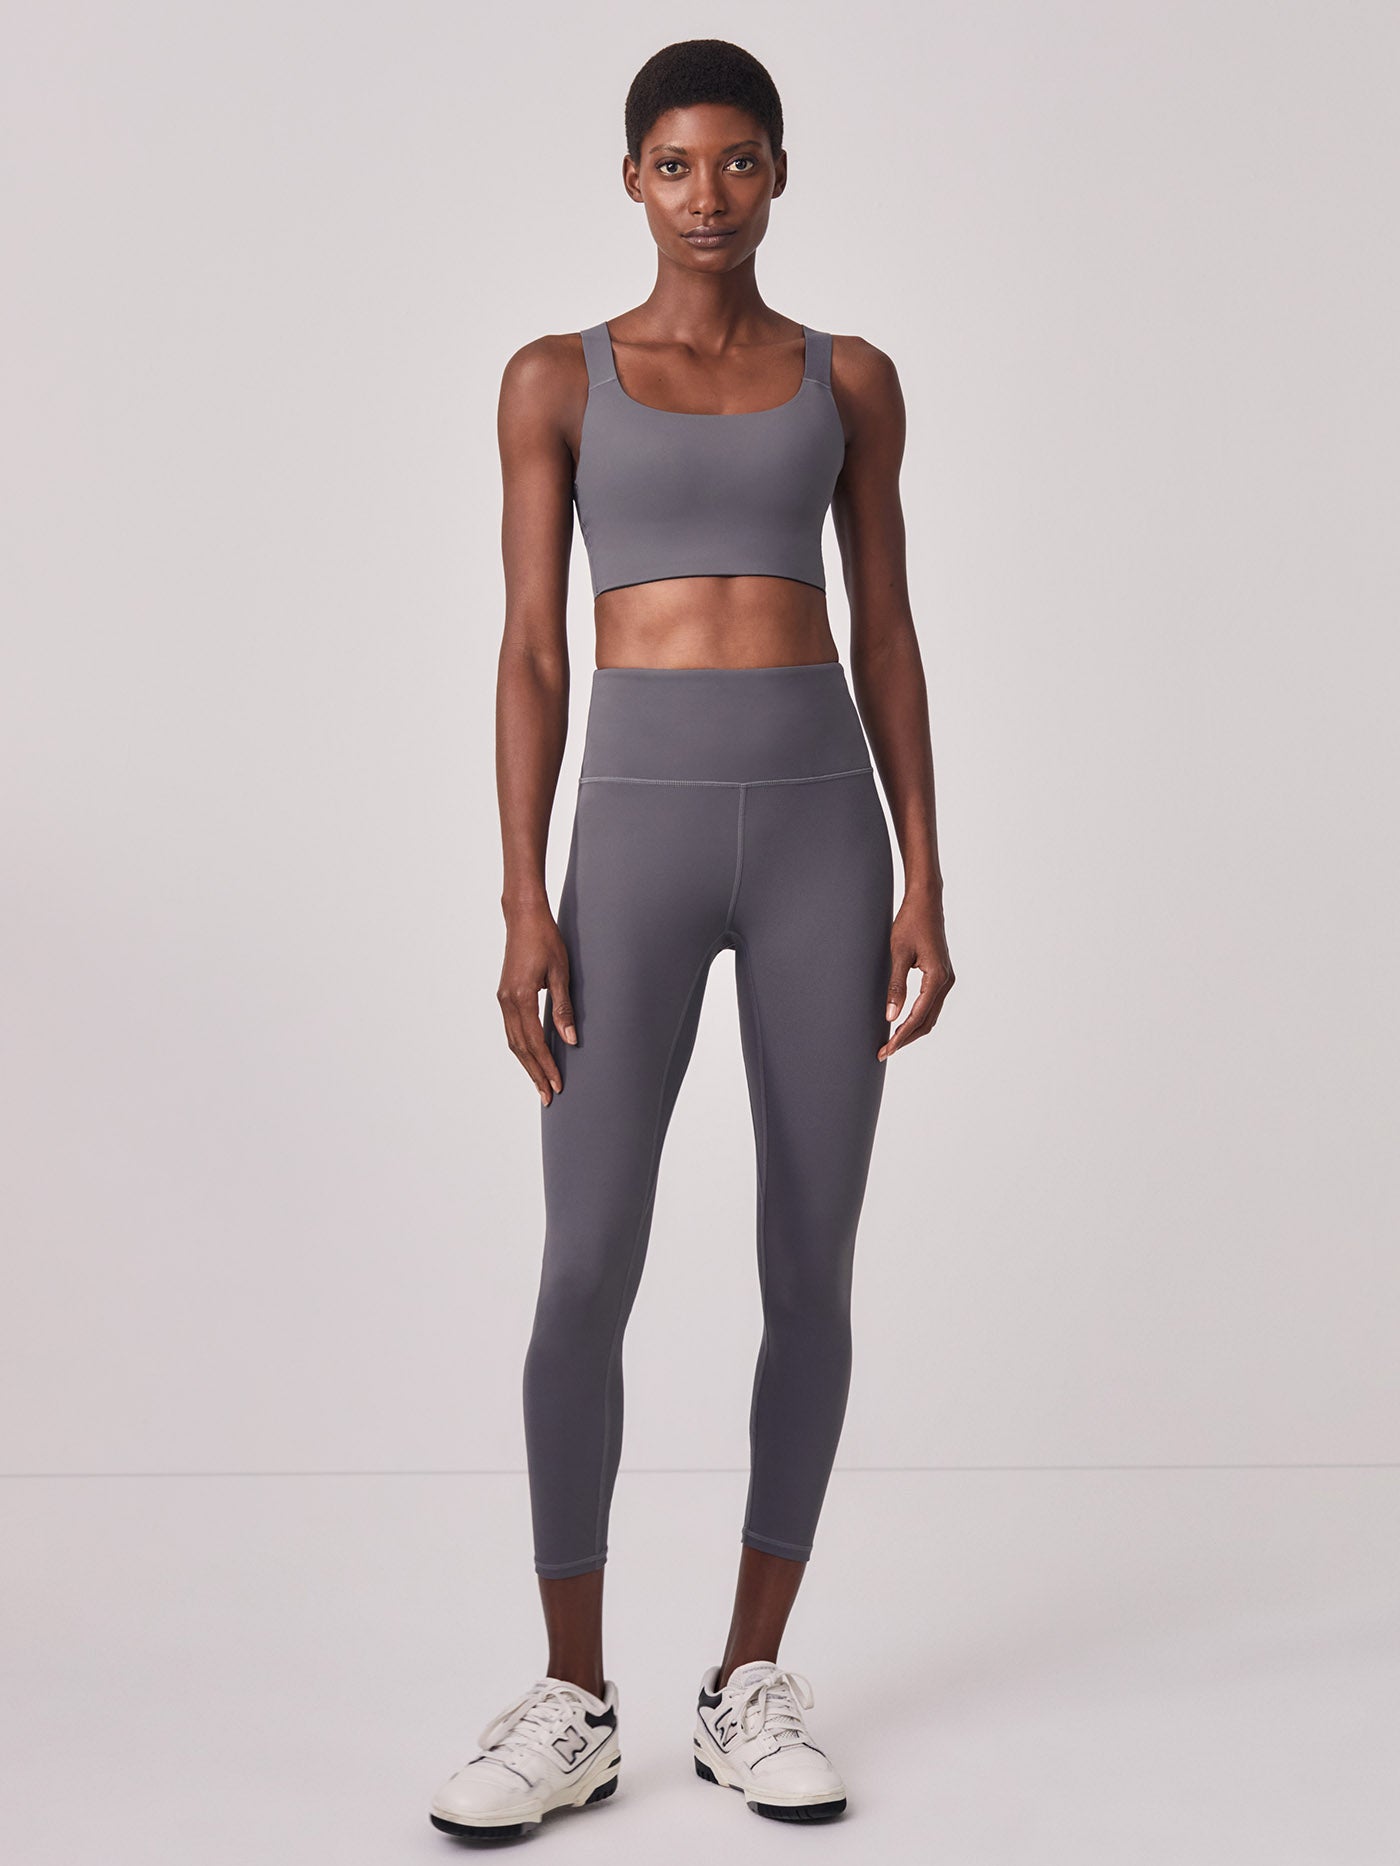 Shop Yoga Pants for Women | Athletic Leggings | JOLYN